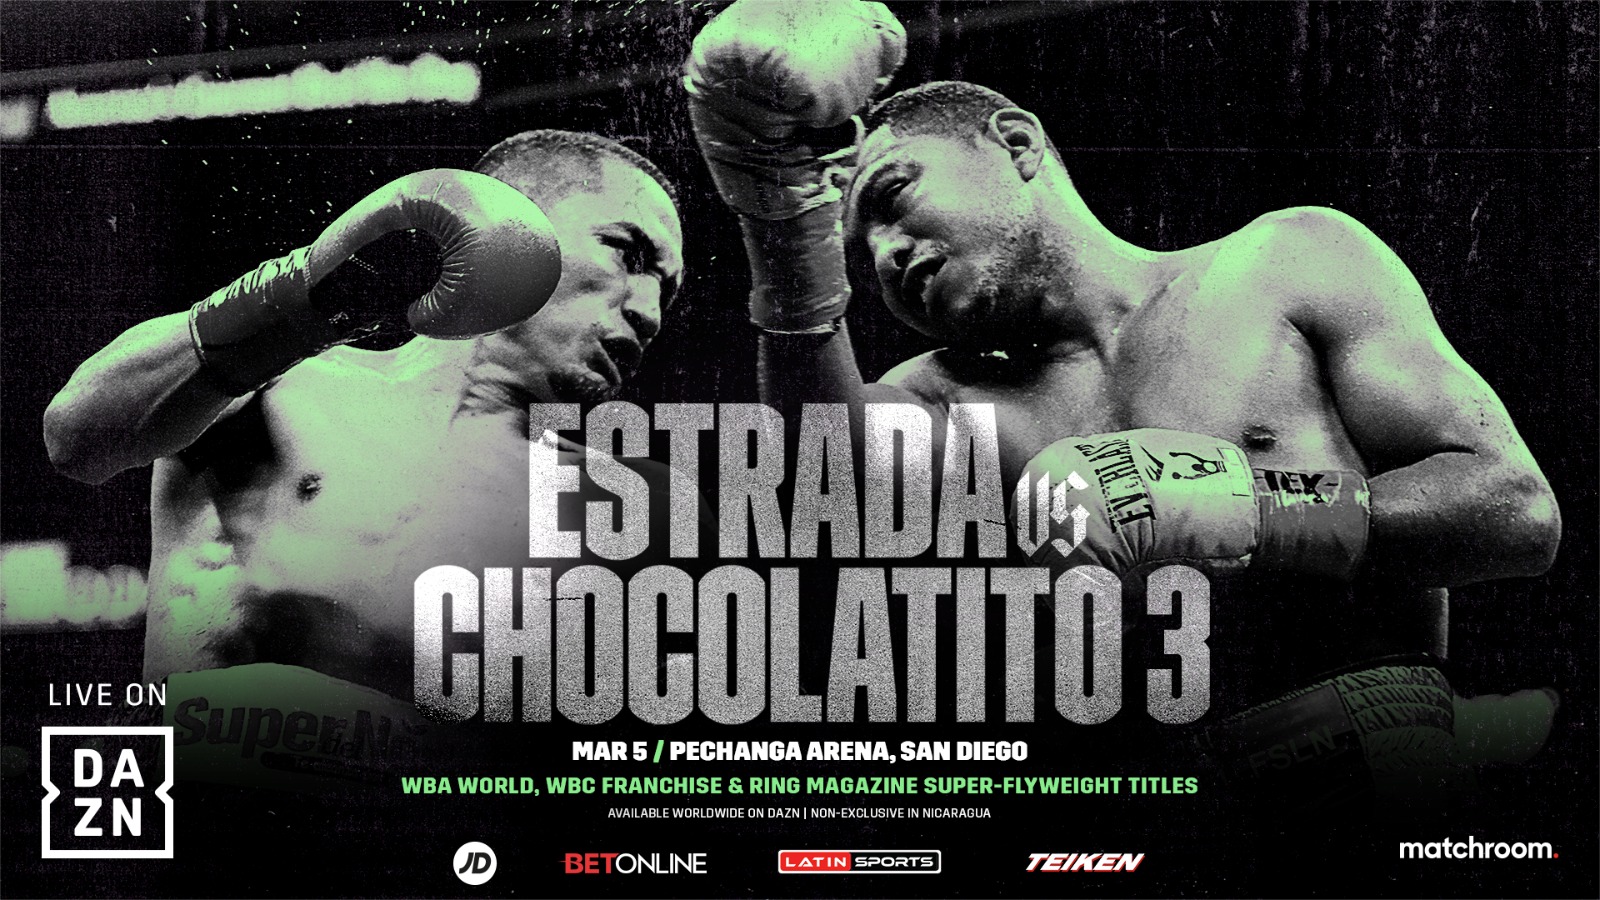 - Boxing News 24, Juan Francisco Estrada, Roman Gonzalez boxing photo and news image